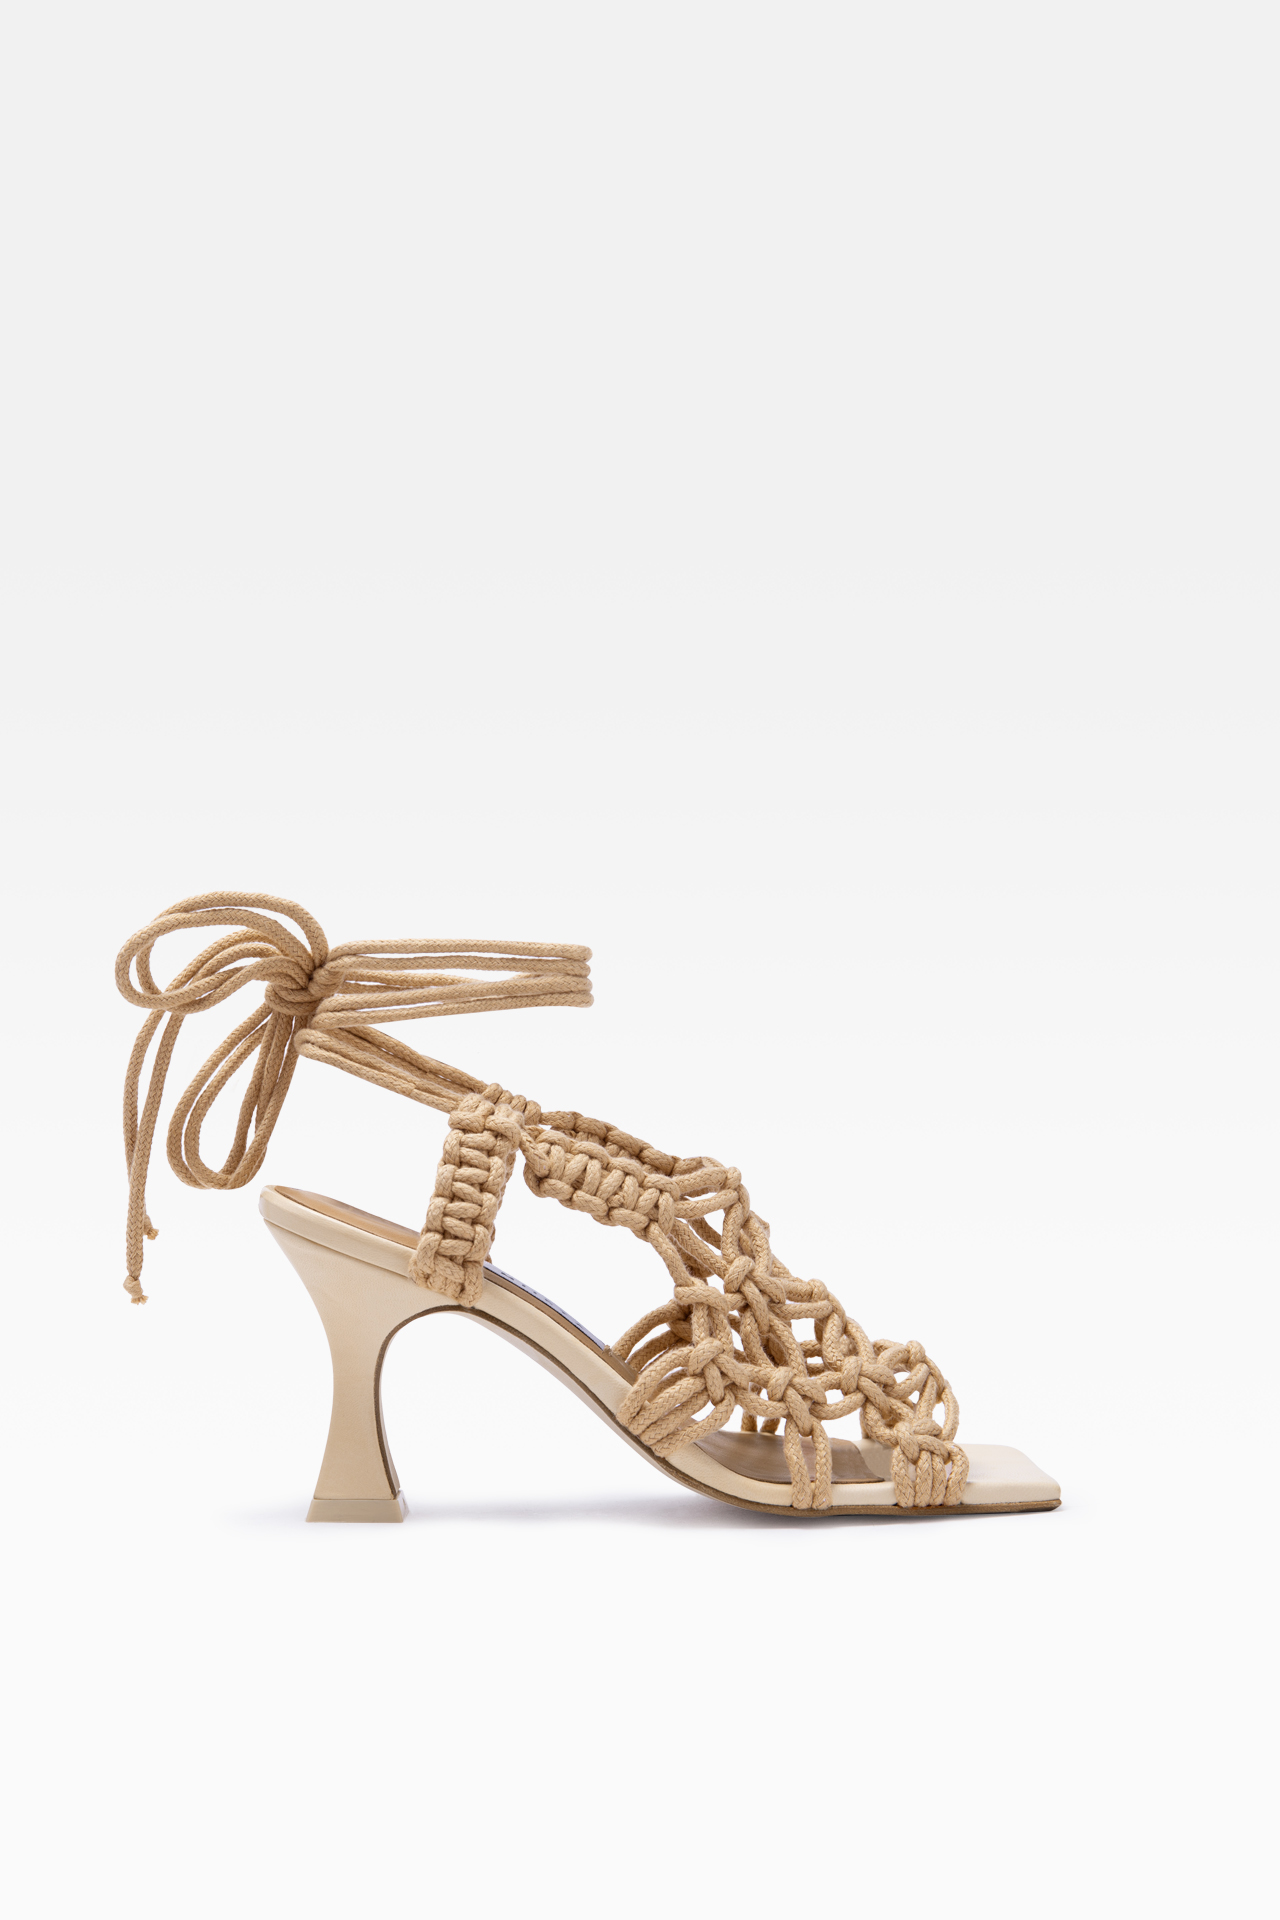 Stephanie Cream Sandals // Miista Shoes // Made in Spain